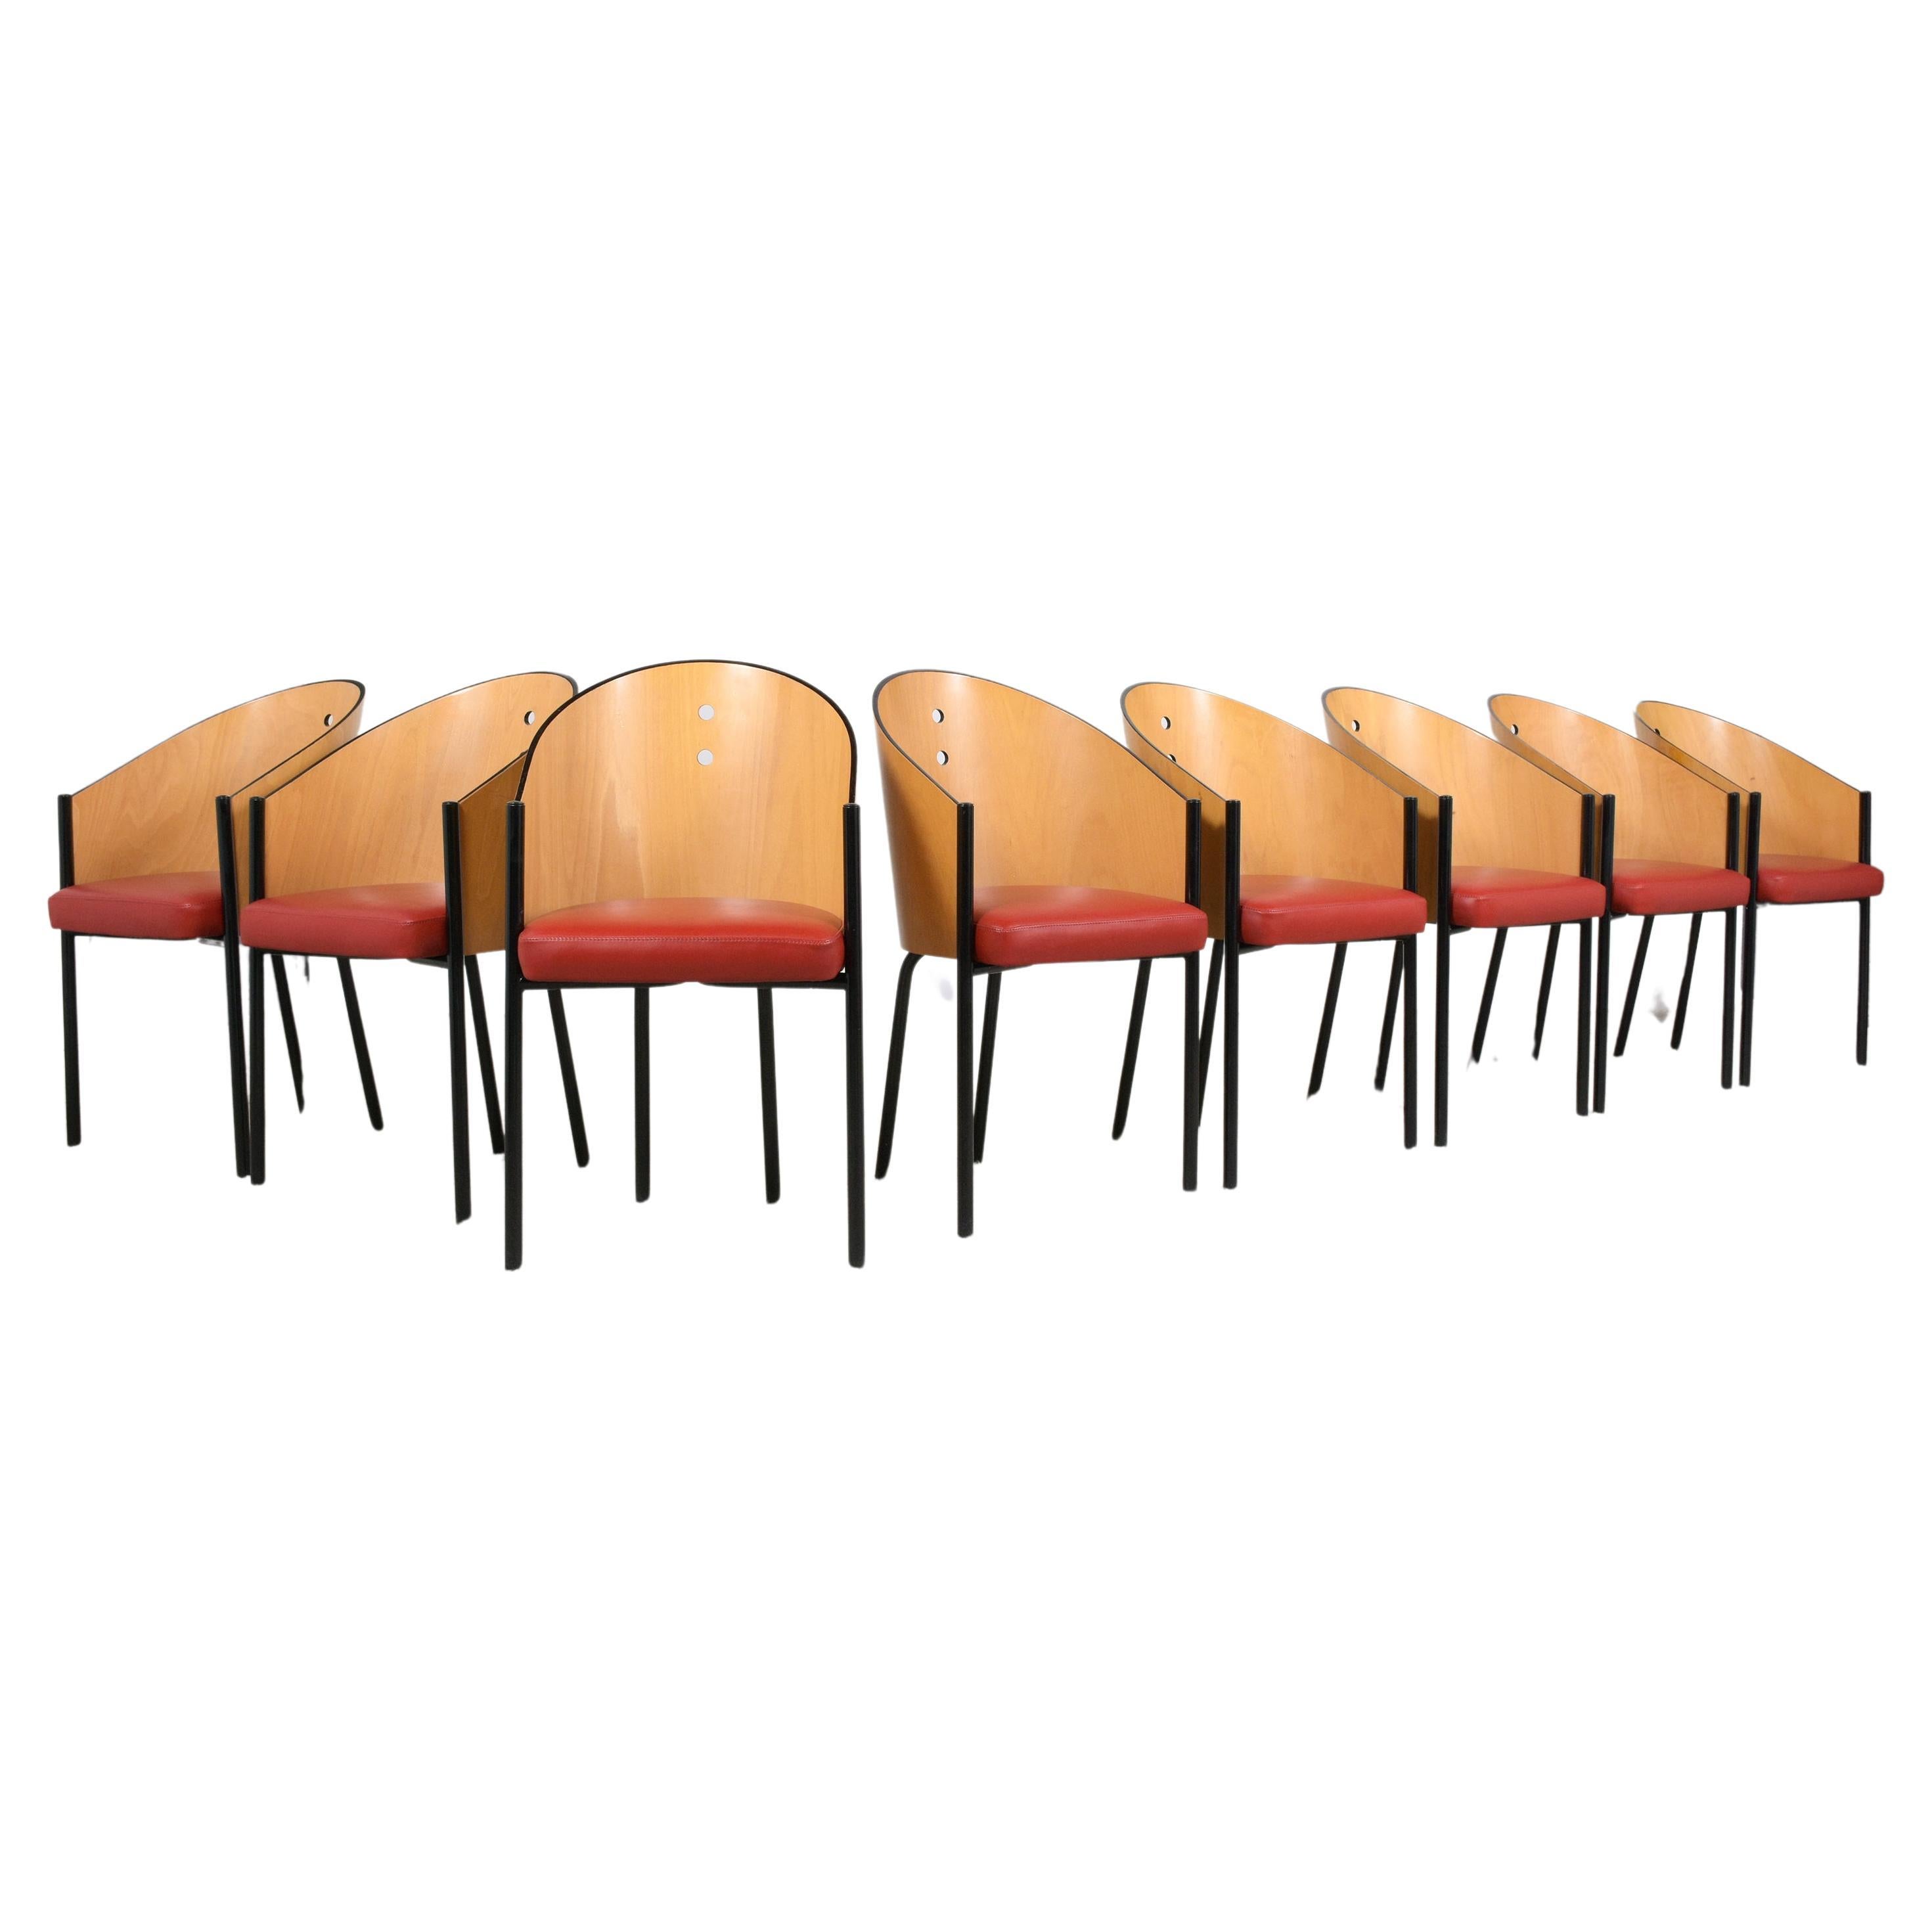 Vintage Mid-Century Dining Chairs: Elegance in Barrel Back Design